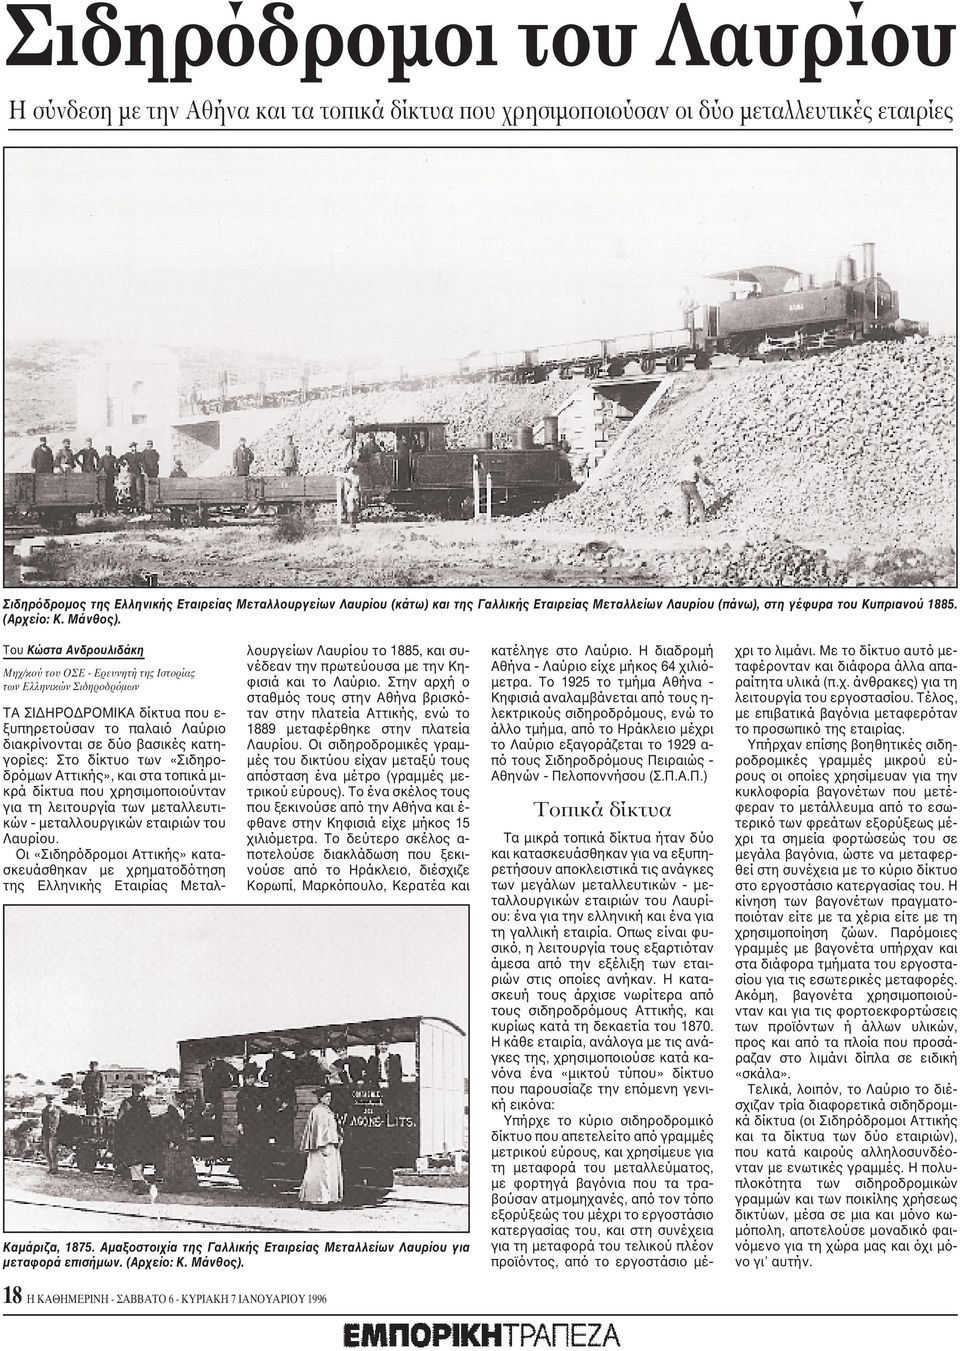 Tου Kώστα Aνδρουλιδάκη Mηχ/κού του OΣE - Eρευνητή της Iστορίας των Eλληνικών Σιδηροδρόμων TA ΣIΔHPOΔPOMIKA δίκτυα που ε- ξυπηρετούσαν το παλαιό Λαύριο διακρίνονται σε δύο βασικές κατηγορίες: Στο